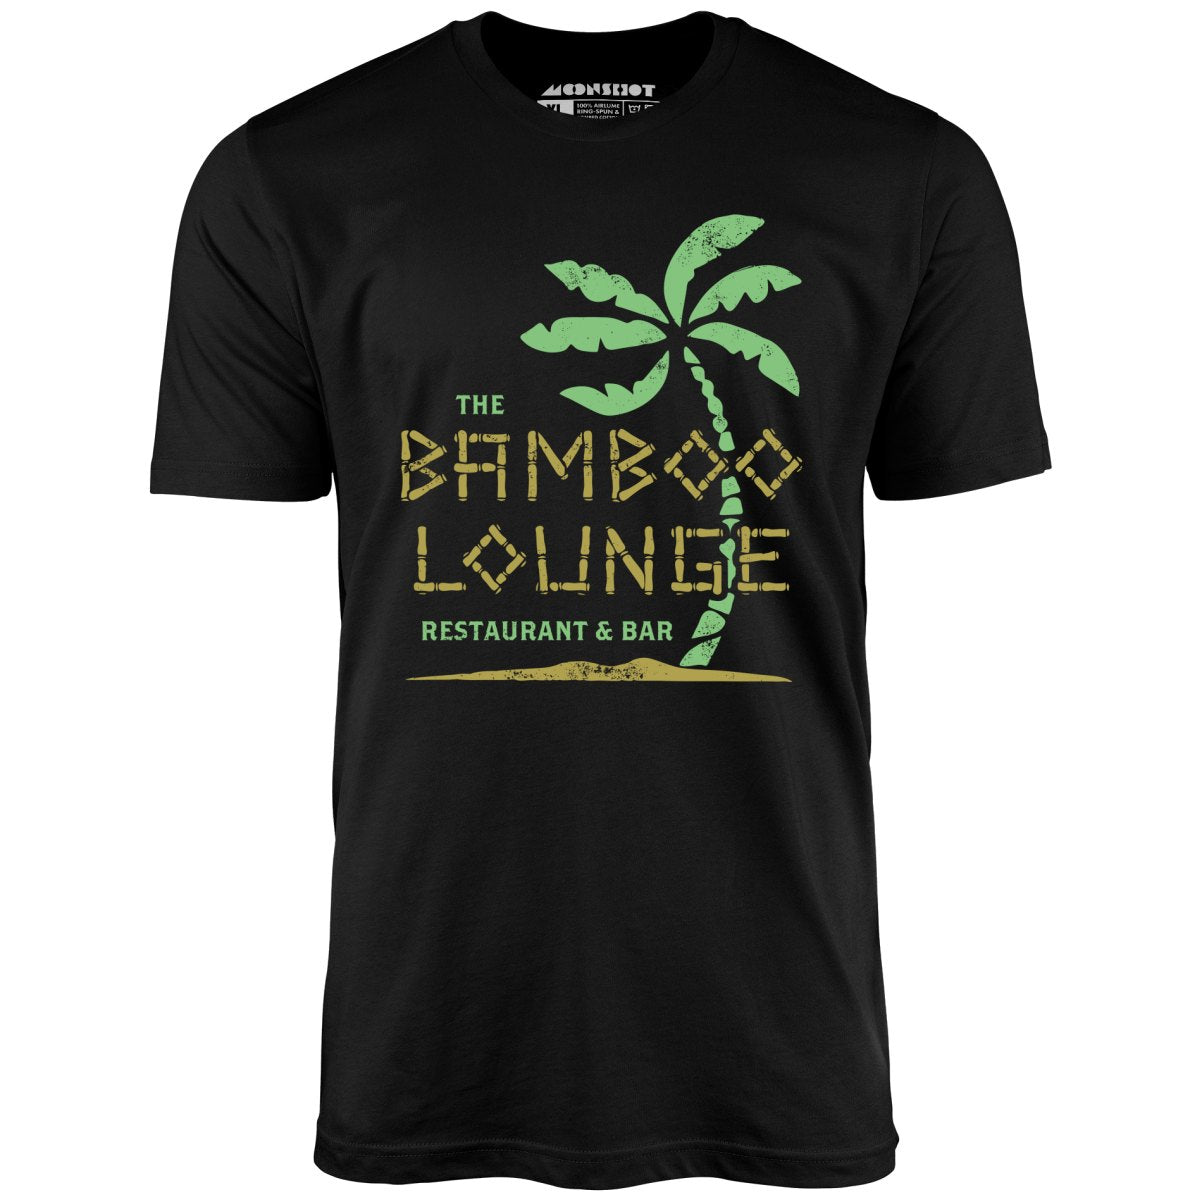 The Bamboo Lounge - Unisex T-Shirt